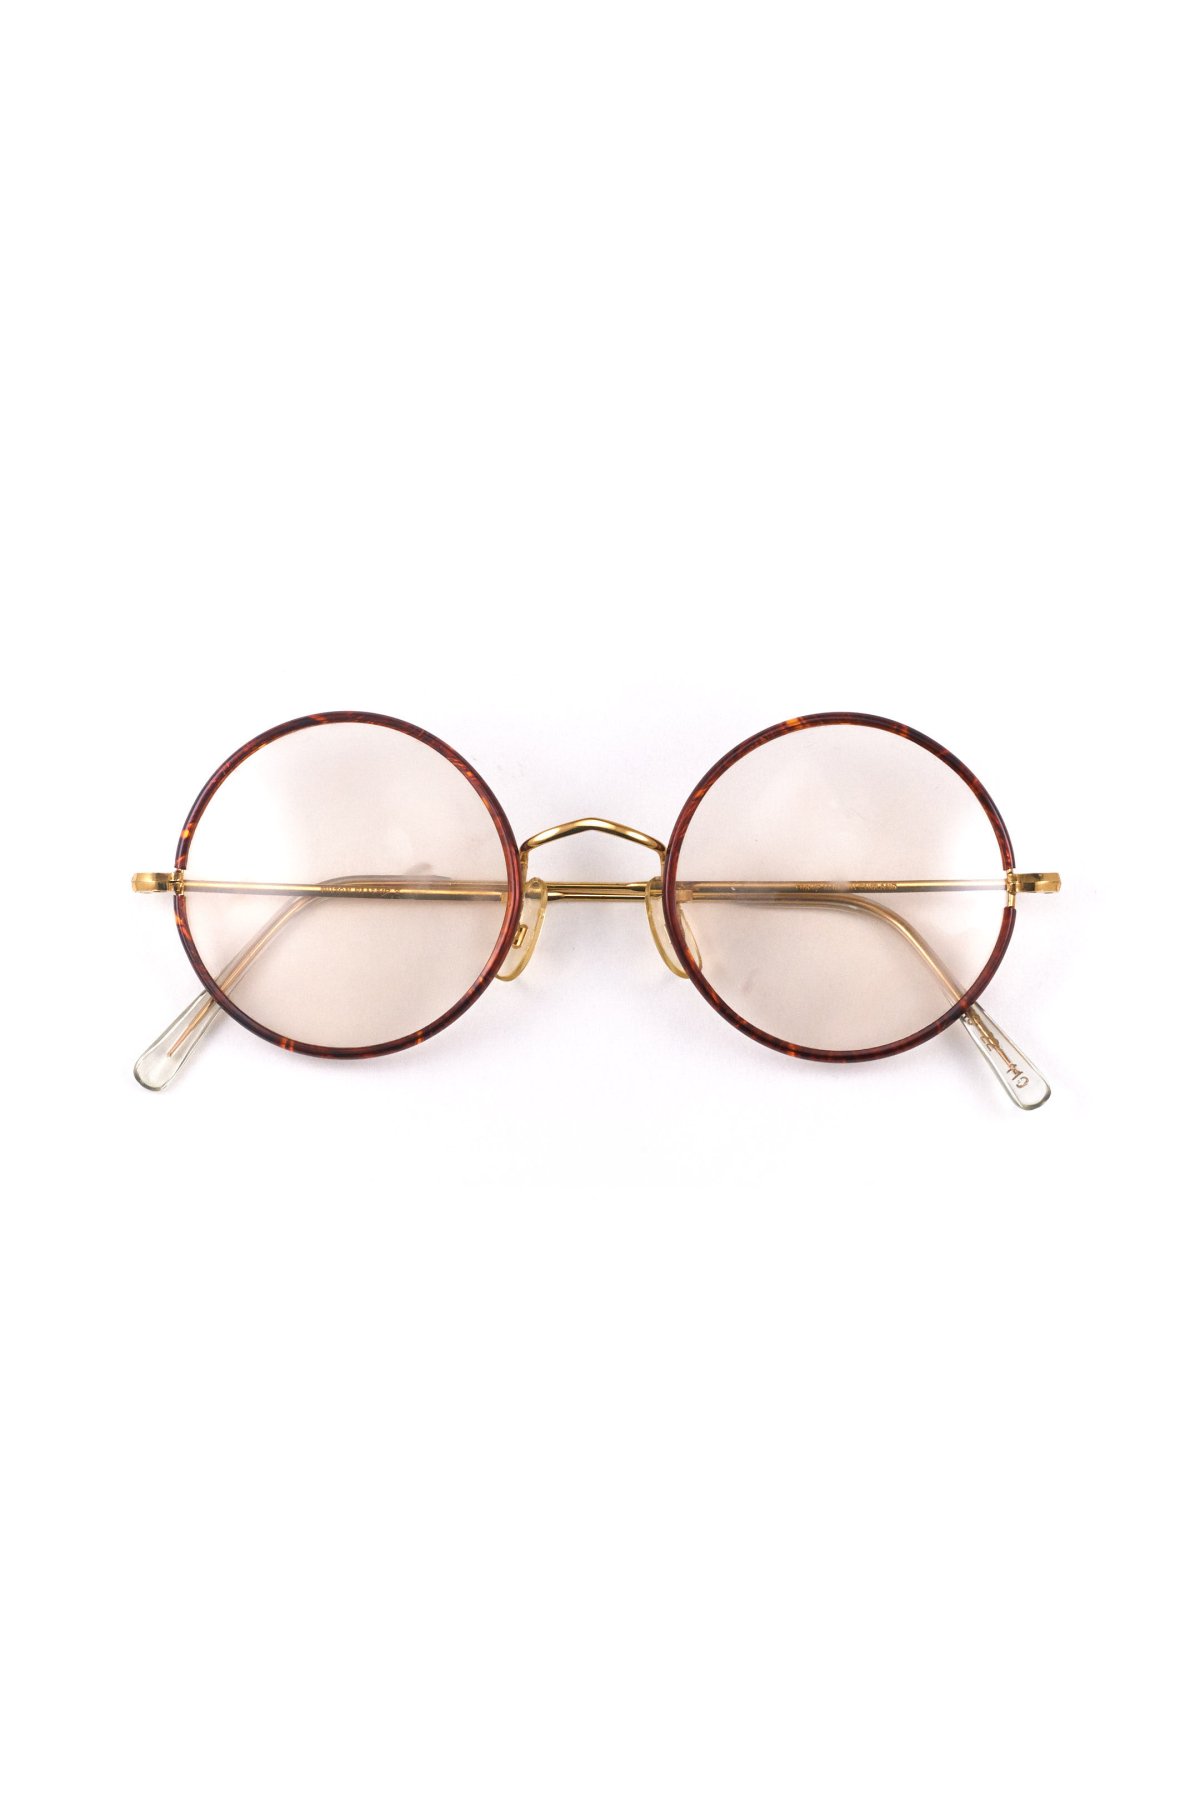 HILTON CLASSIC London eyewear 14KT 14金 - サングラス/メガネ